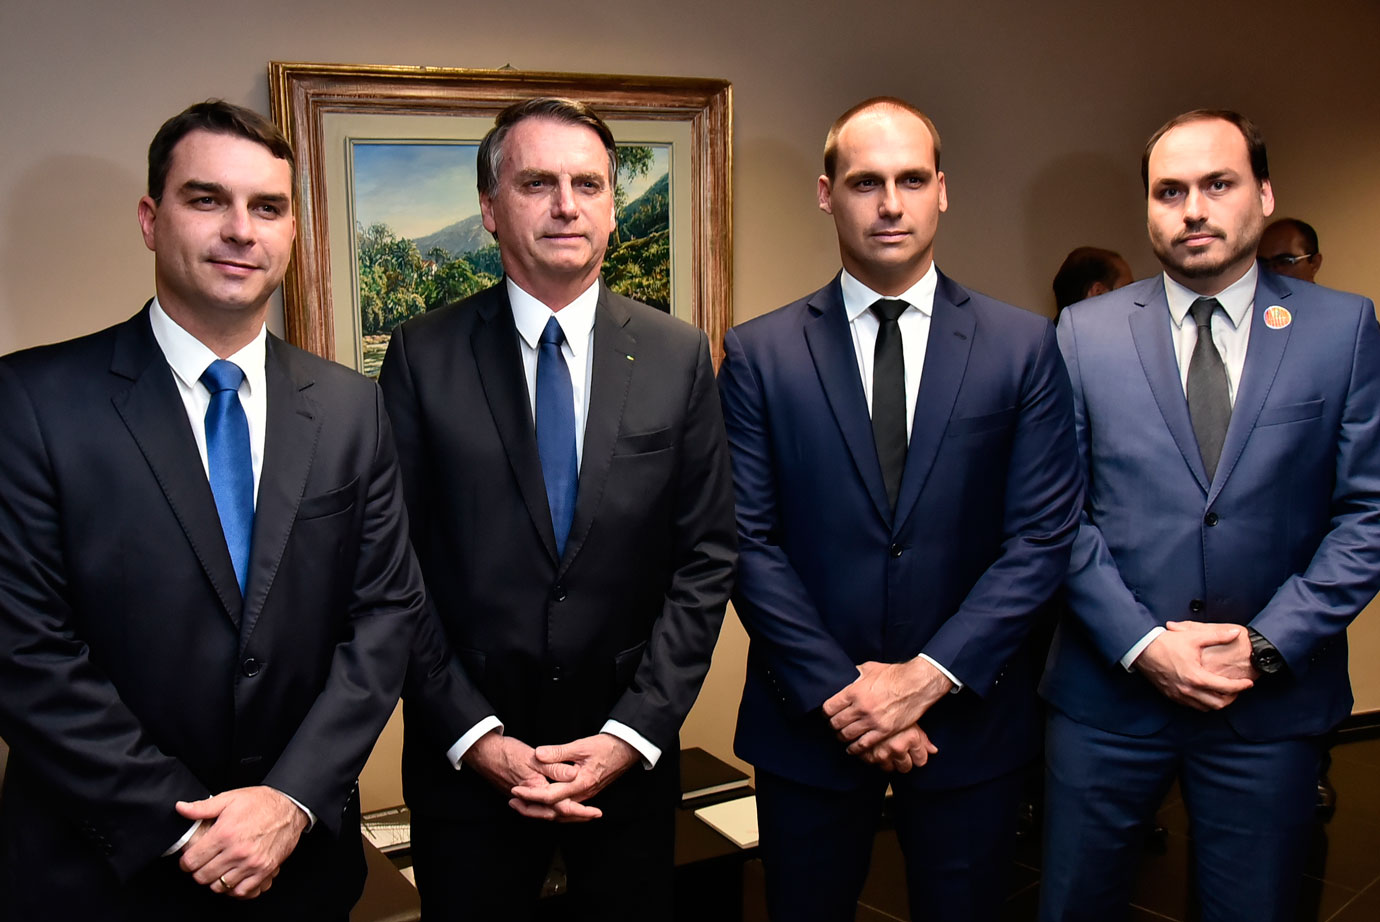 The Bolsonaro clan, from left to right: Senator Flávio Bolsonaro, President Jair Bolsonaro, Deputy Eduardo Bolsonaro, and City Councilman Carlos Bolsonaro.